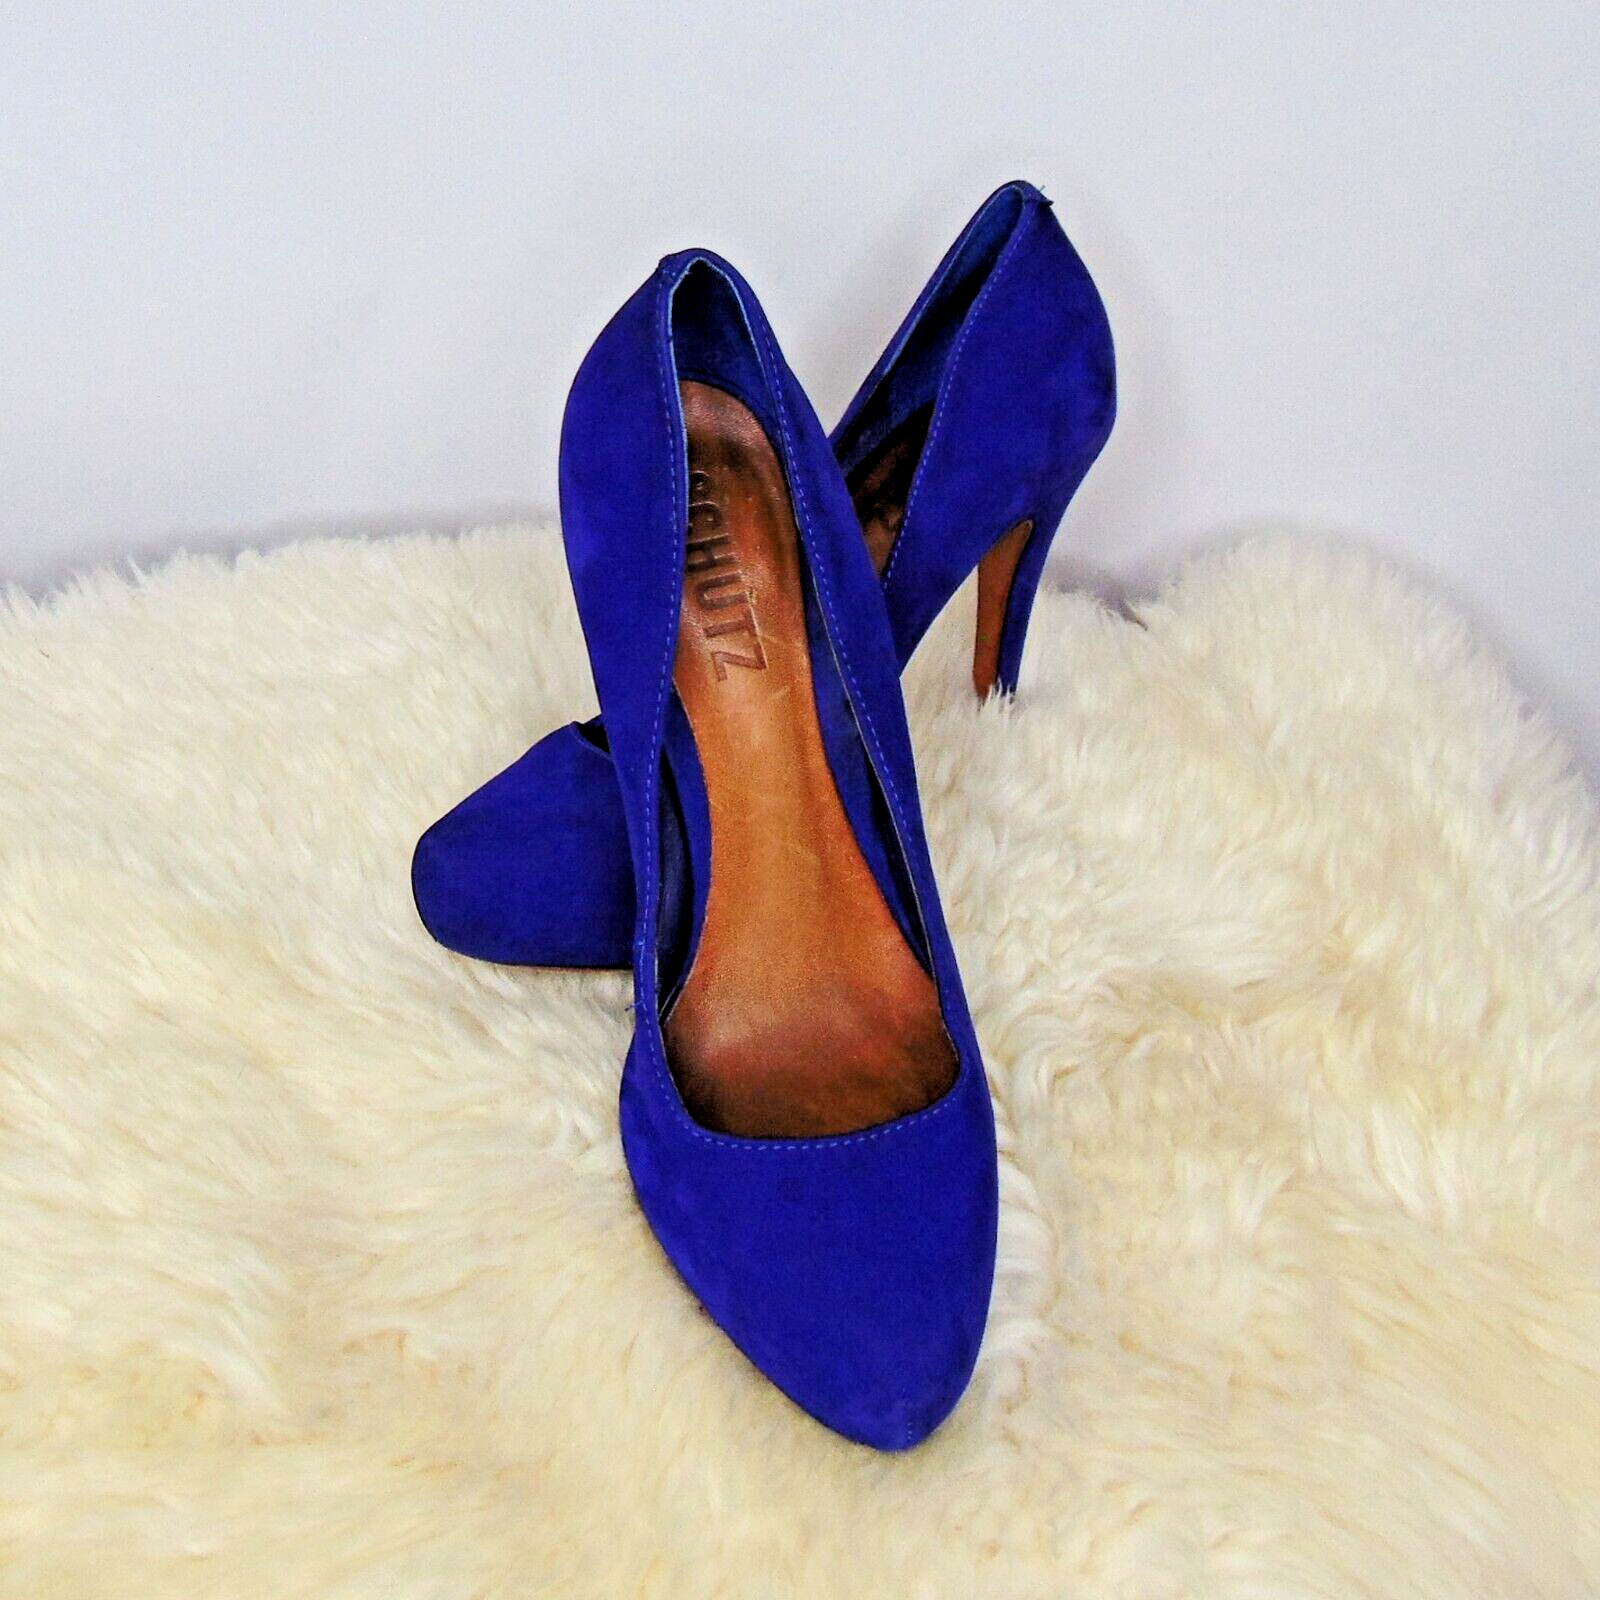 Schutz Womens suede leather blue purple high heel pumps size 8